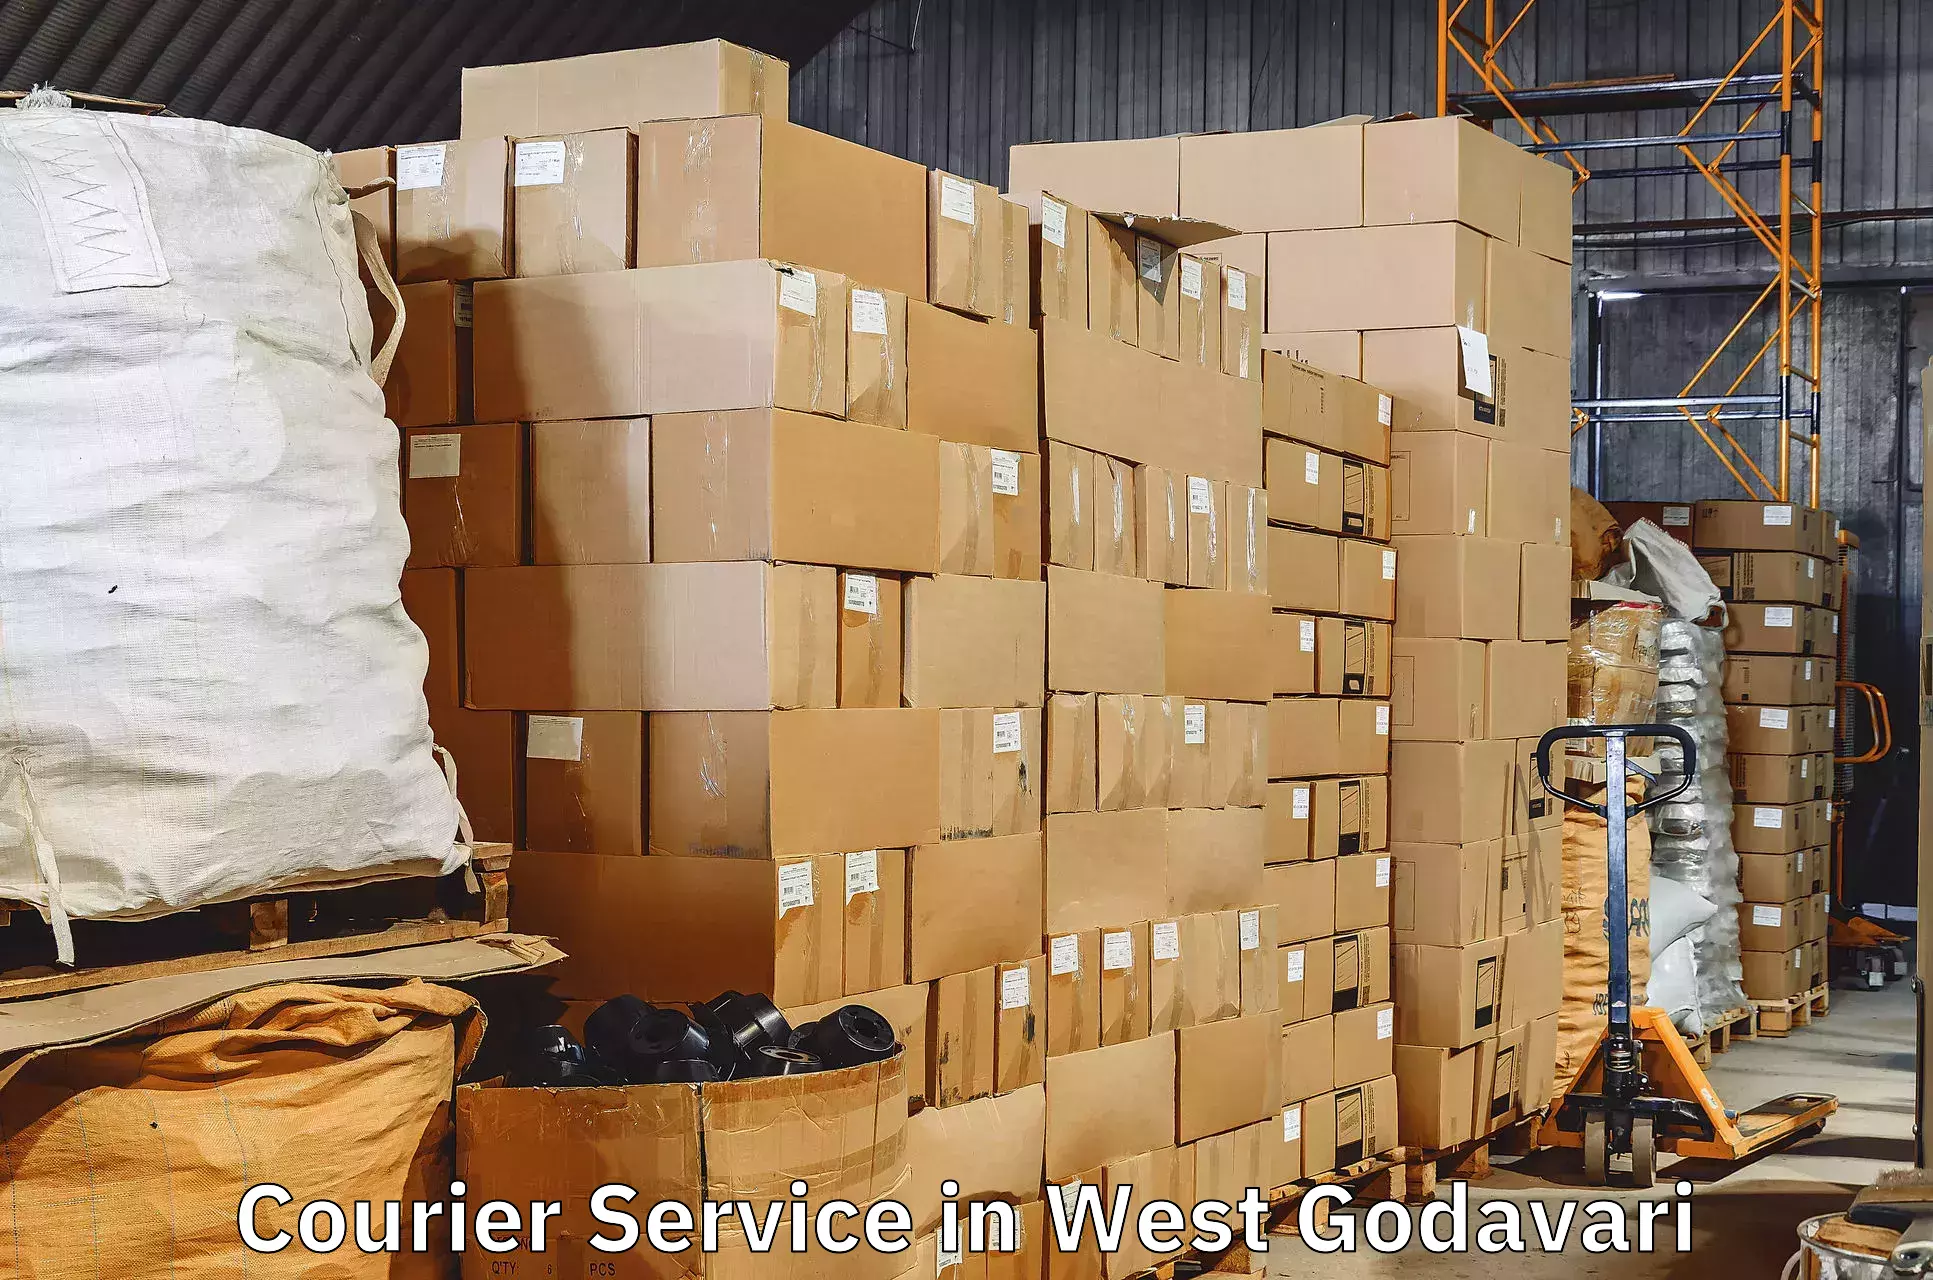 Shipping and handling in West Godavari